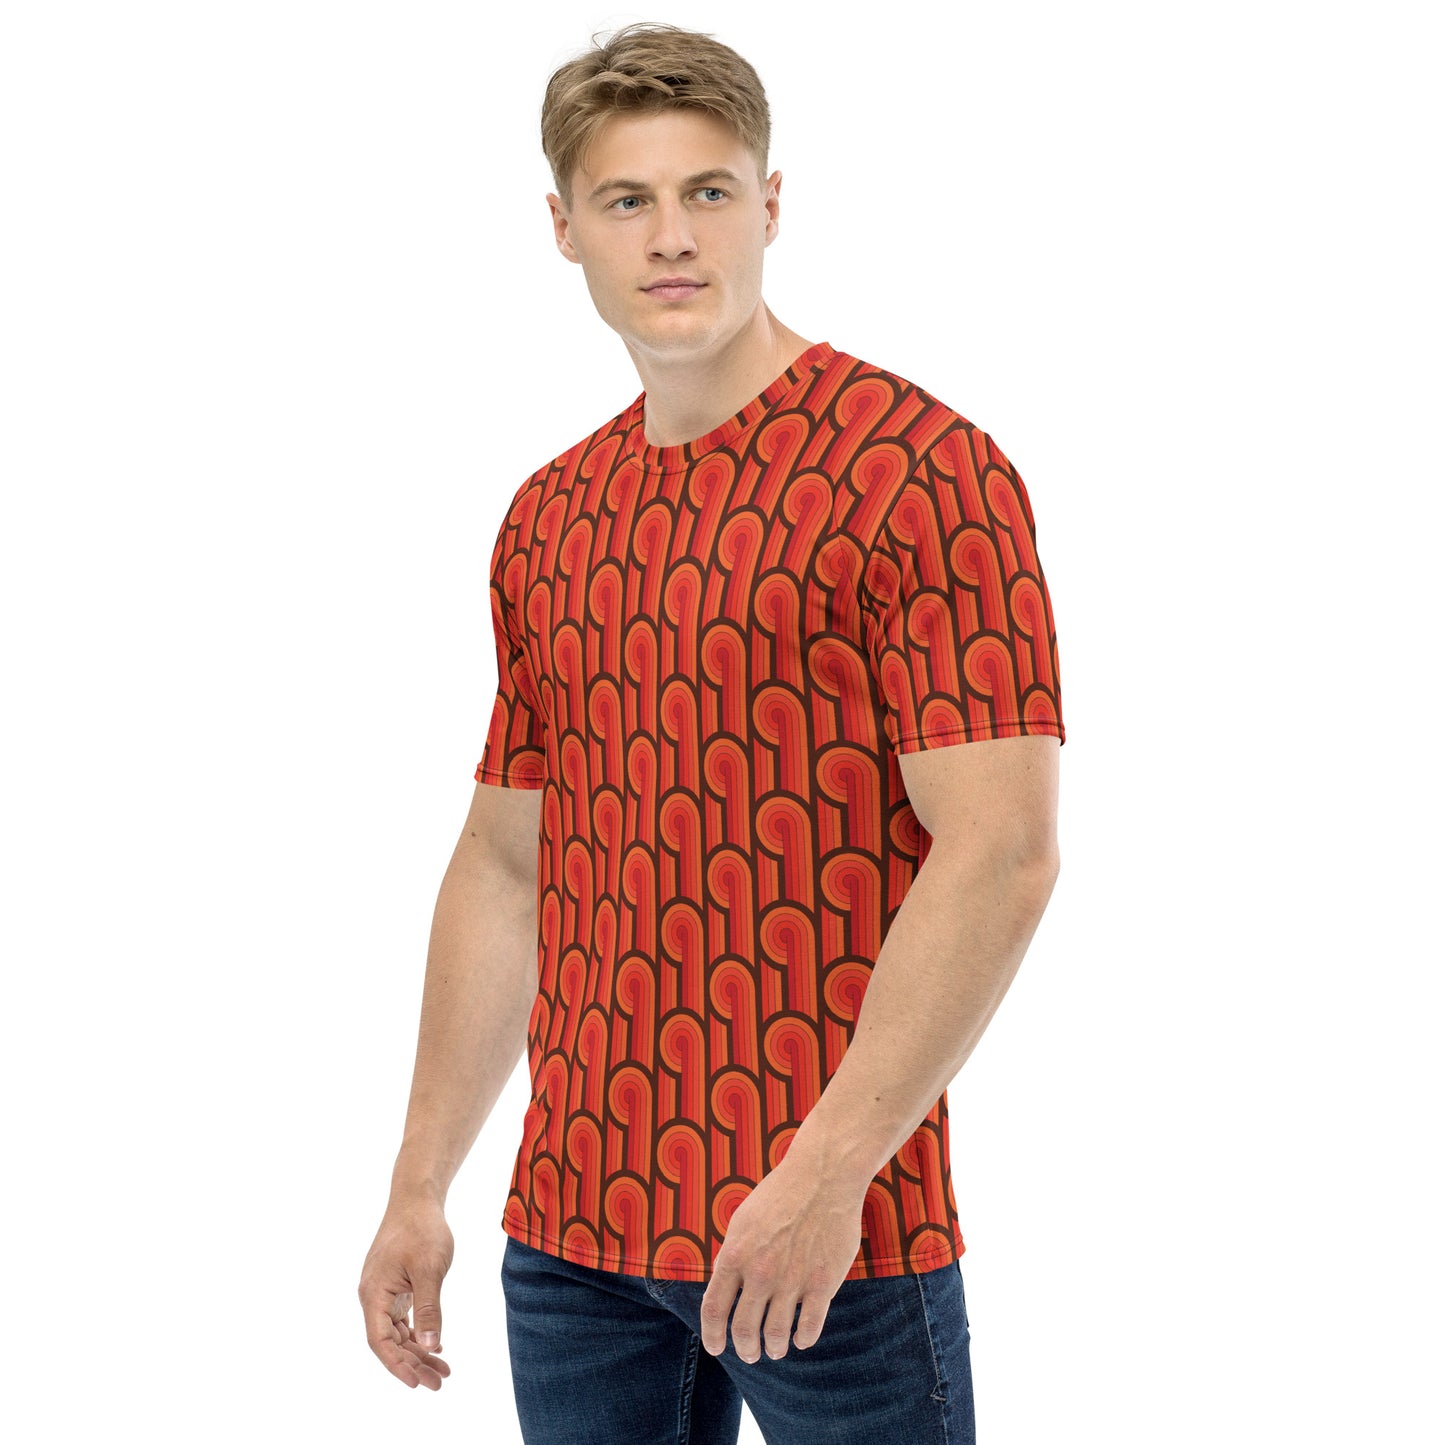 Groovy Men Tshirt, Geometric Retro Red Brown 70s Designer Graphic Aesthetic Fashion Crewneck Tee Top Gift Shirt Starcove Fashion